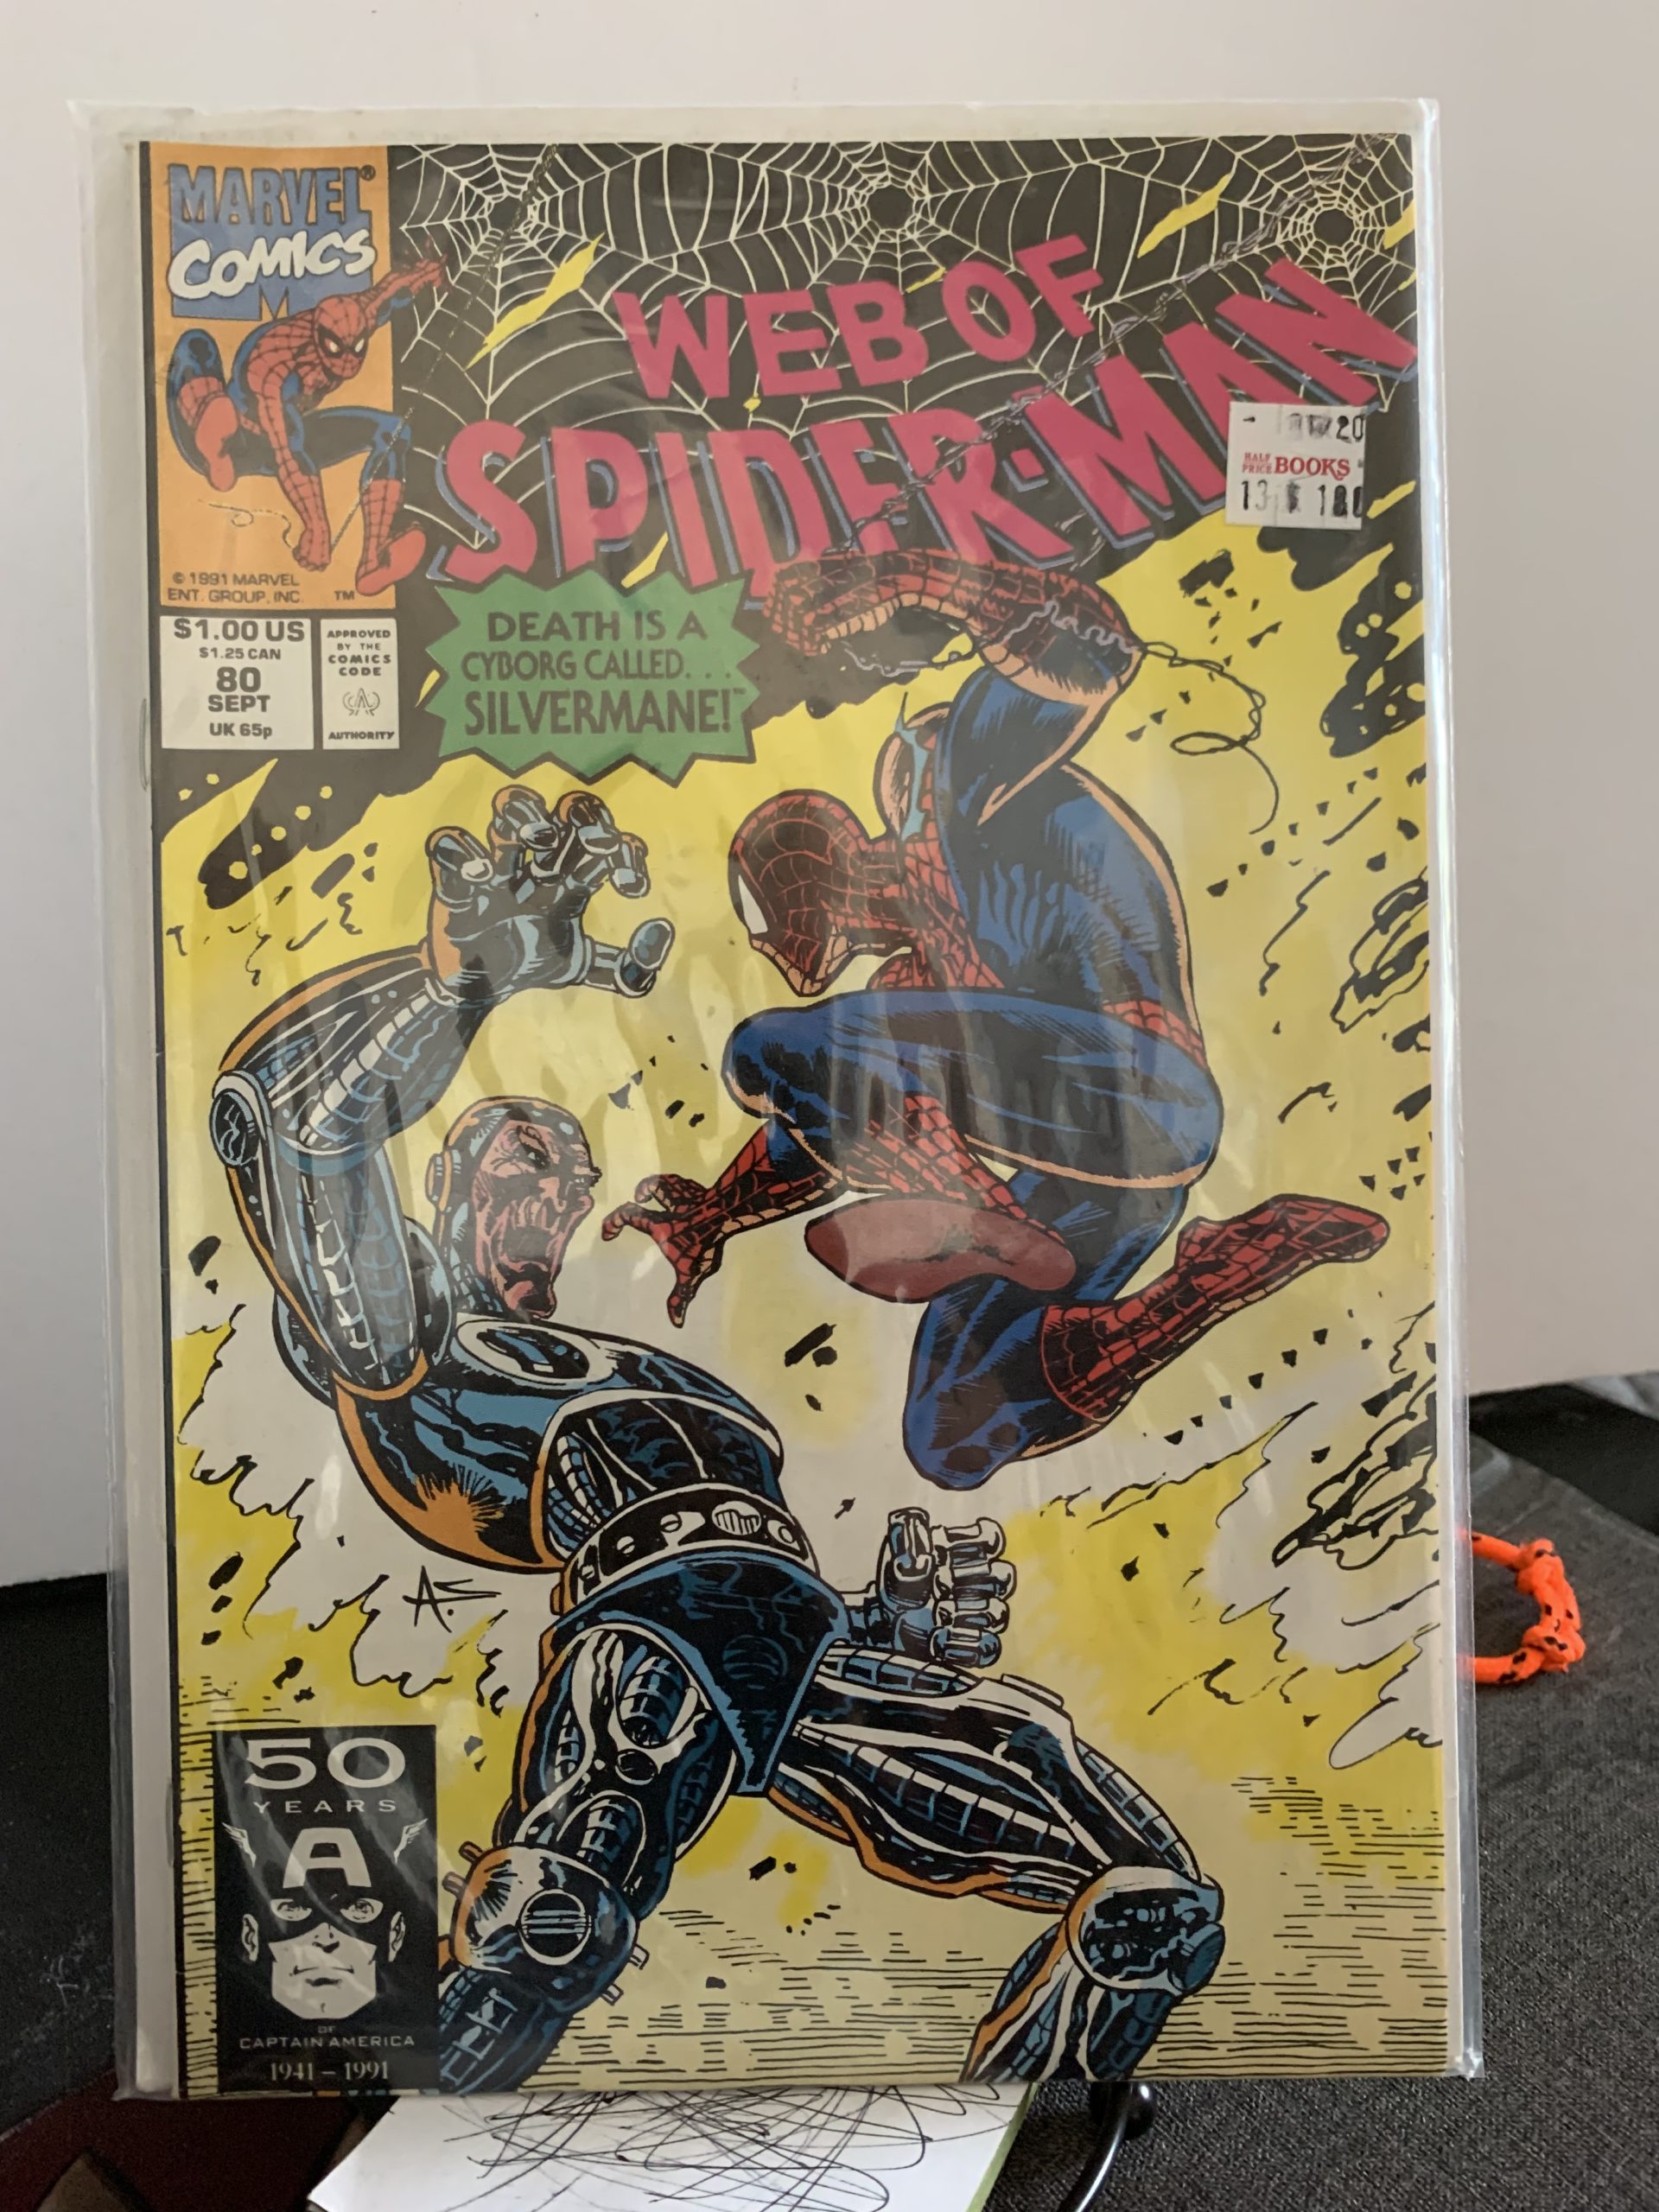 USA, 1991 Web of Spiderman # 80 